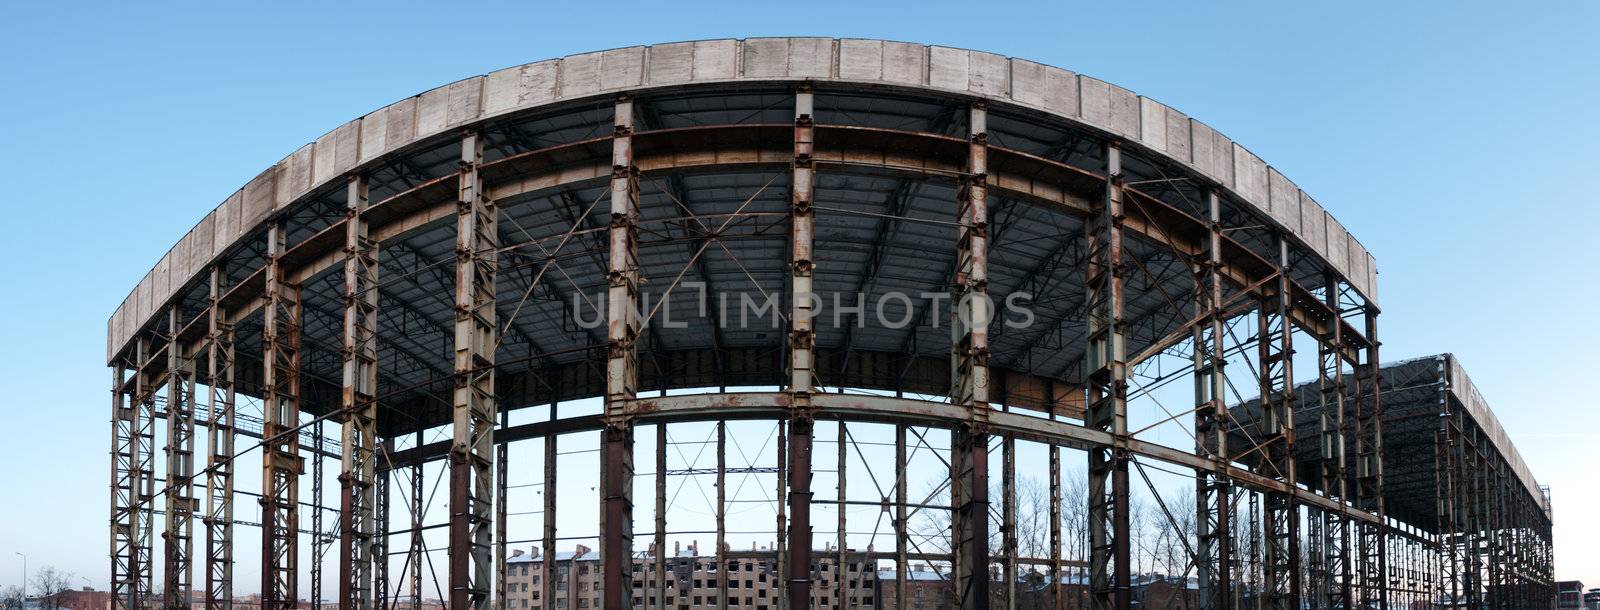 Panoramic abandoned construction by dmitryelagin